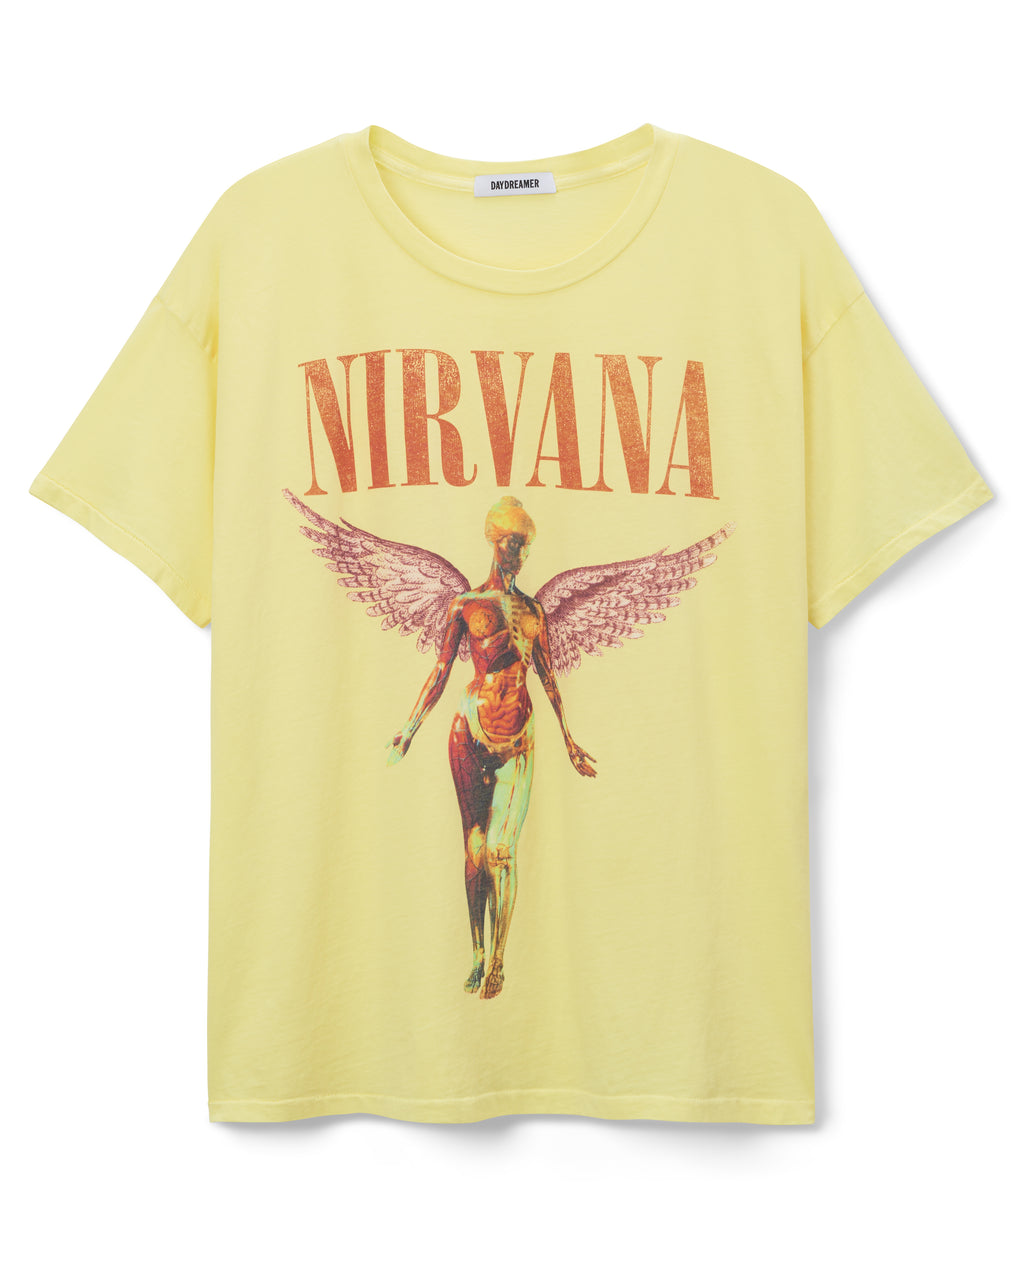 Daydreamer Nirvana In Utero Cover Merch Tee